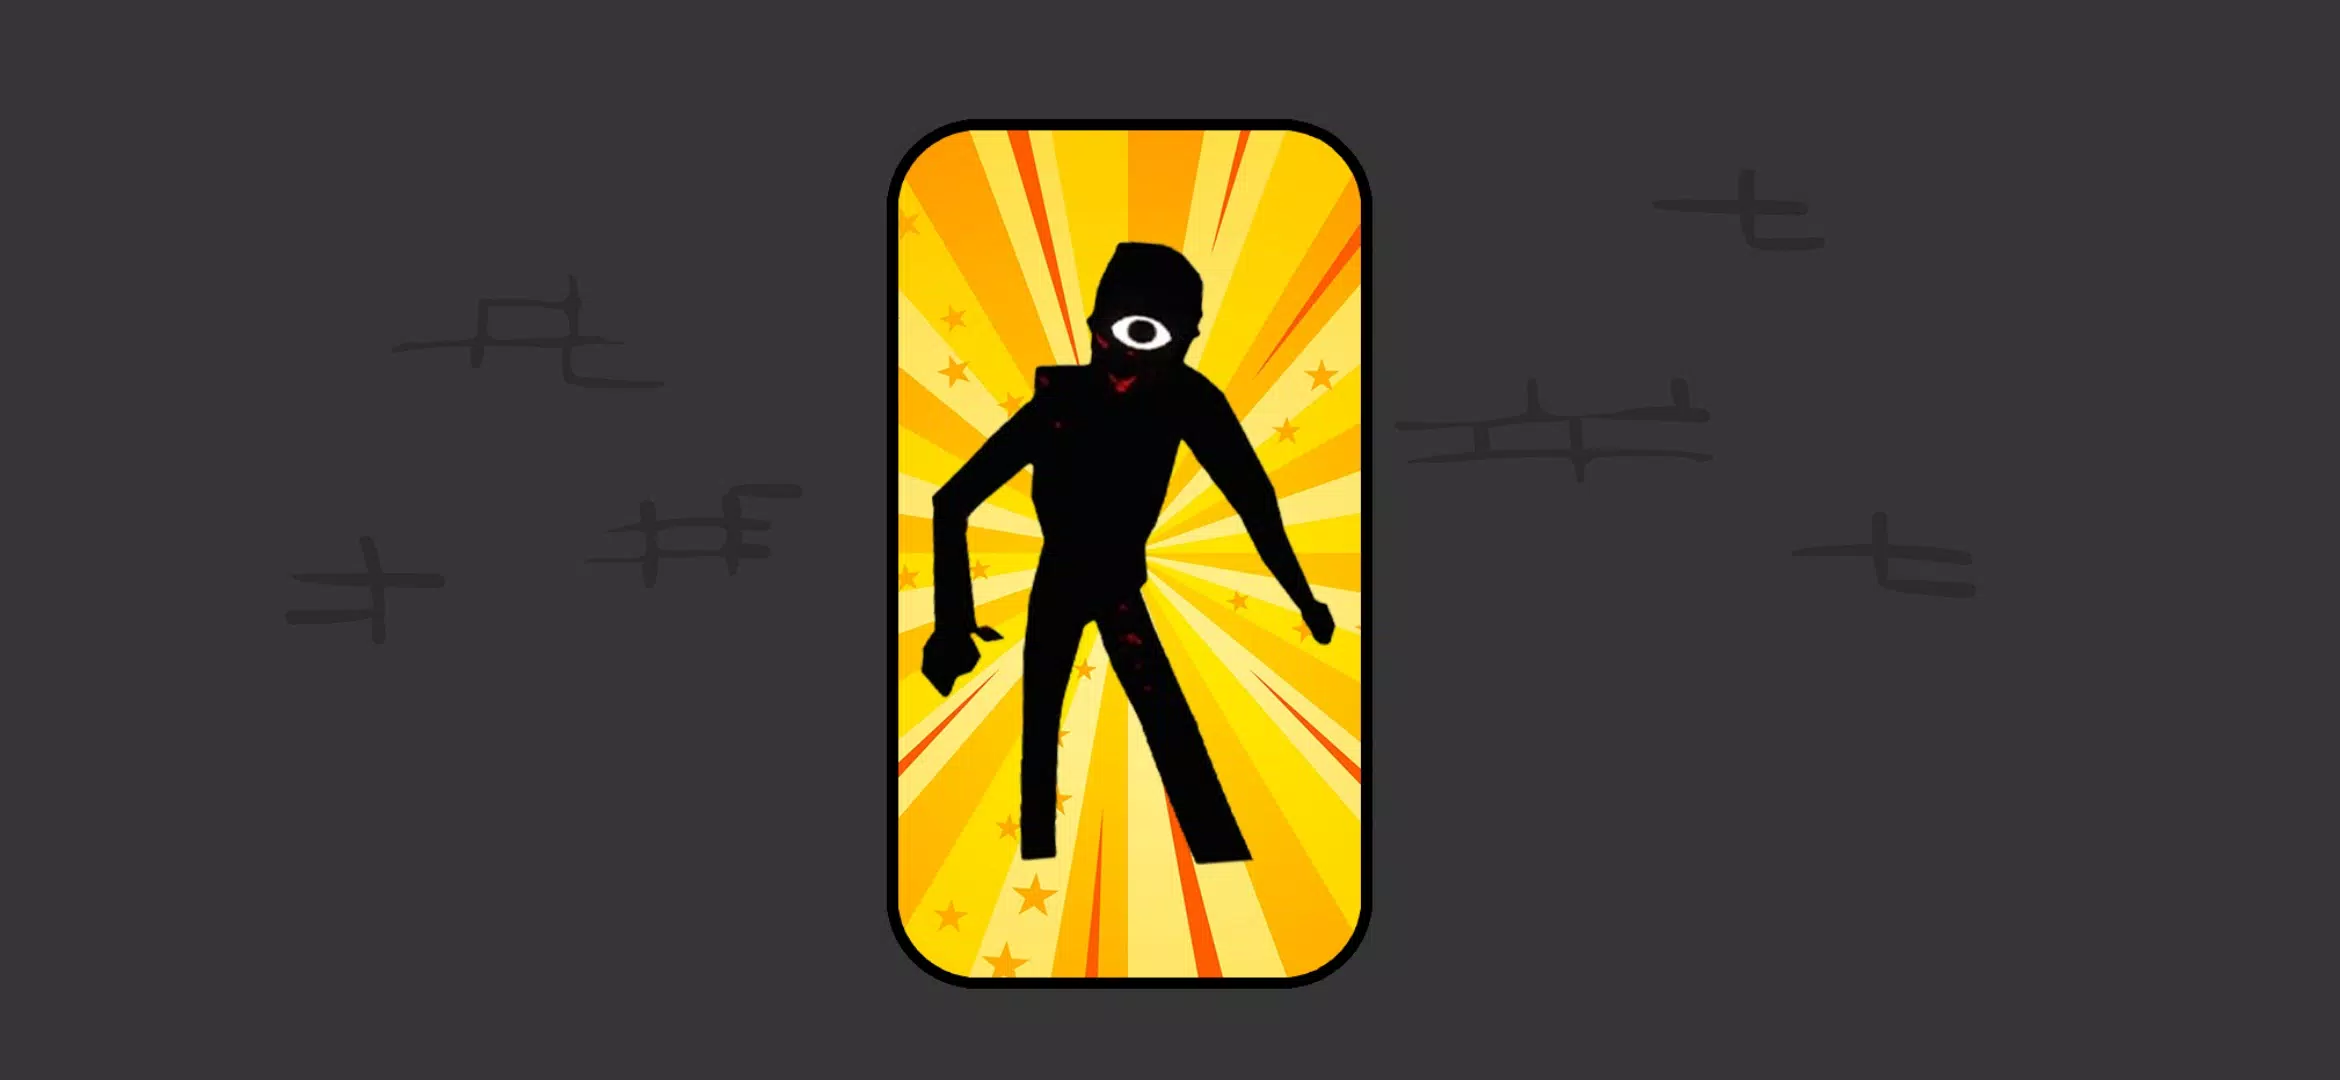 App FNF Doors Seek Game Mod Test Android game 2022 